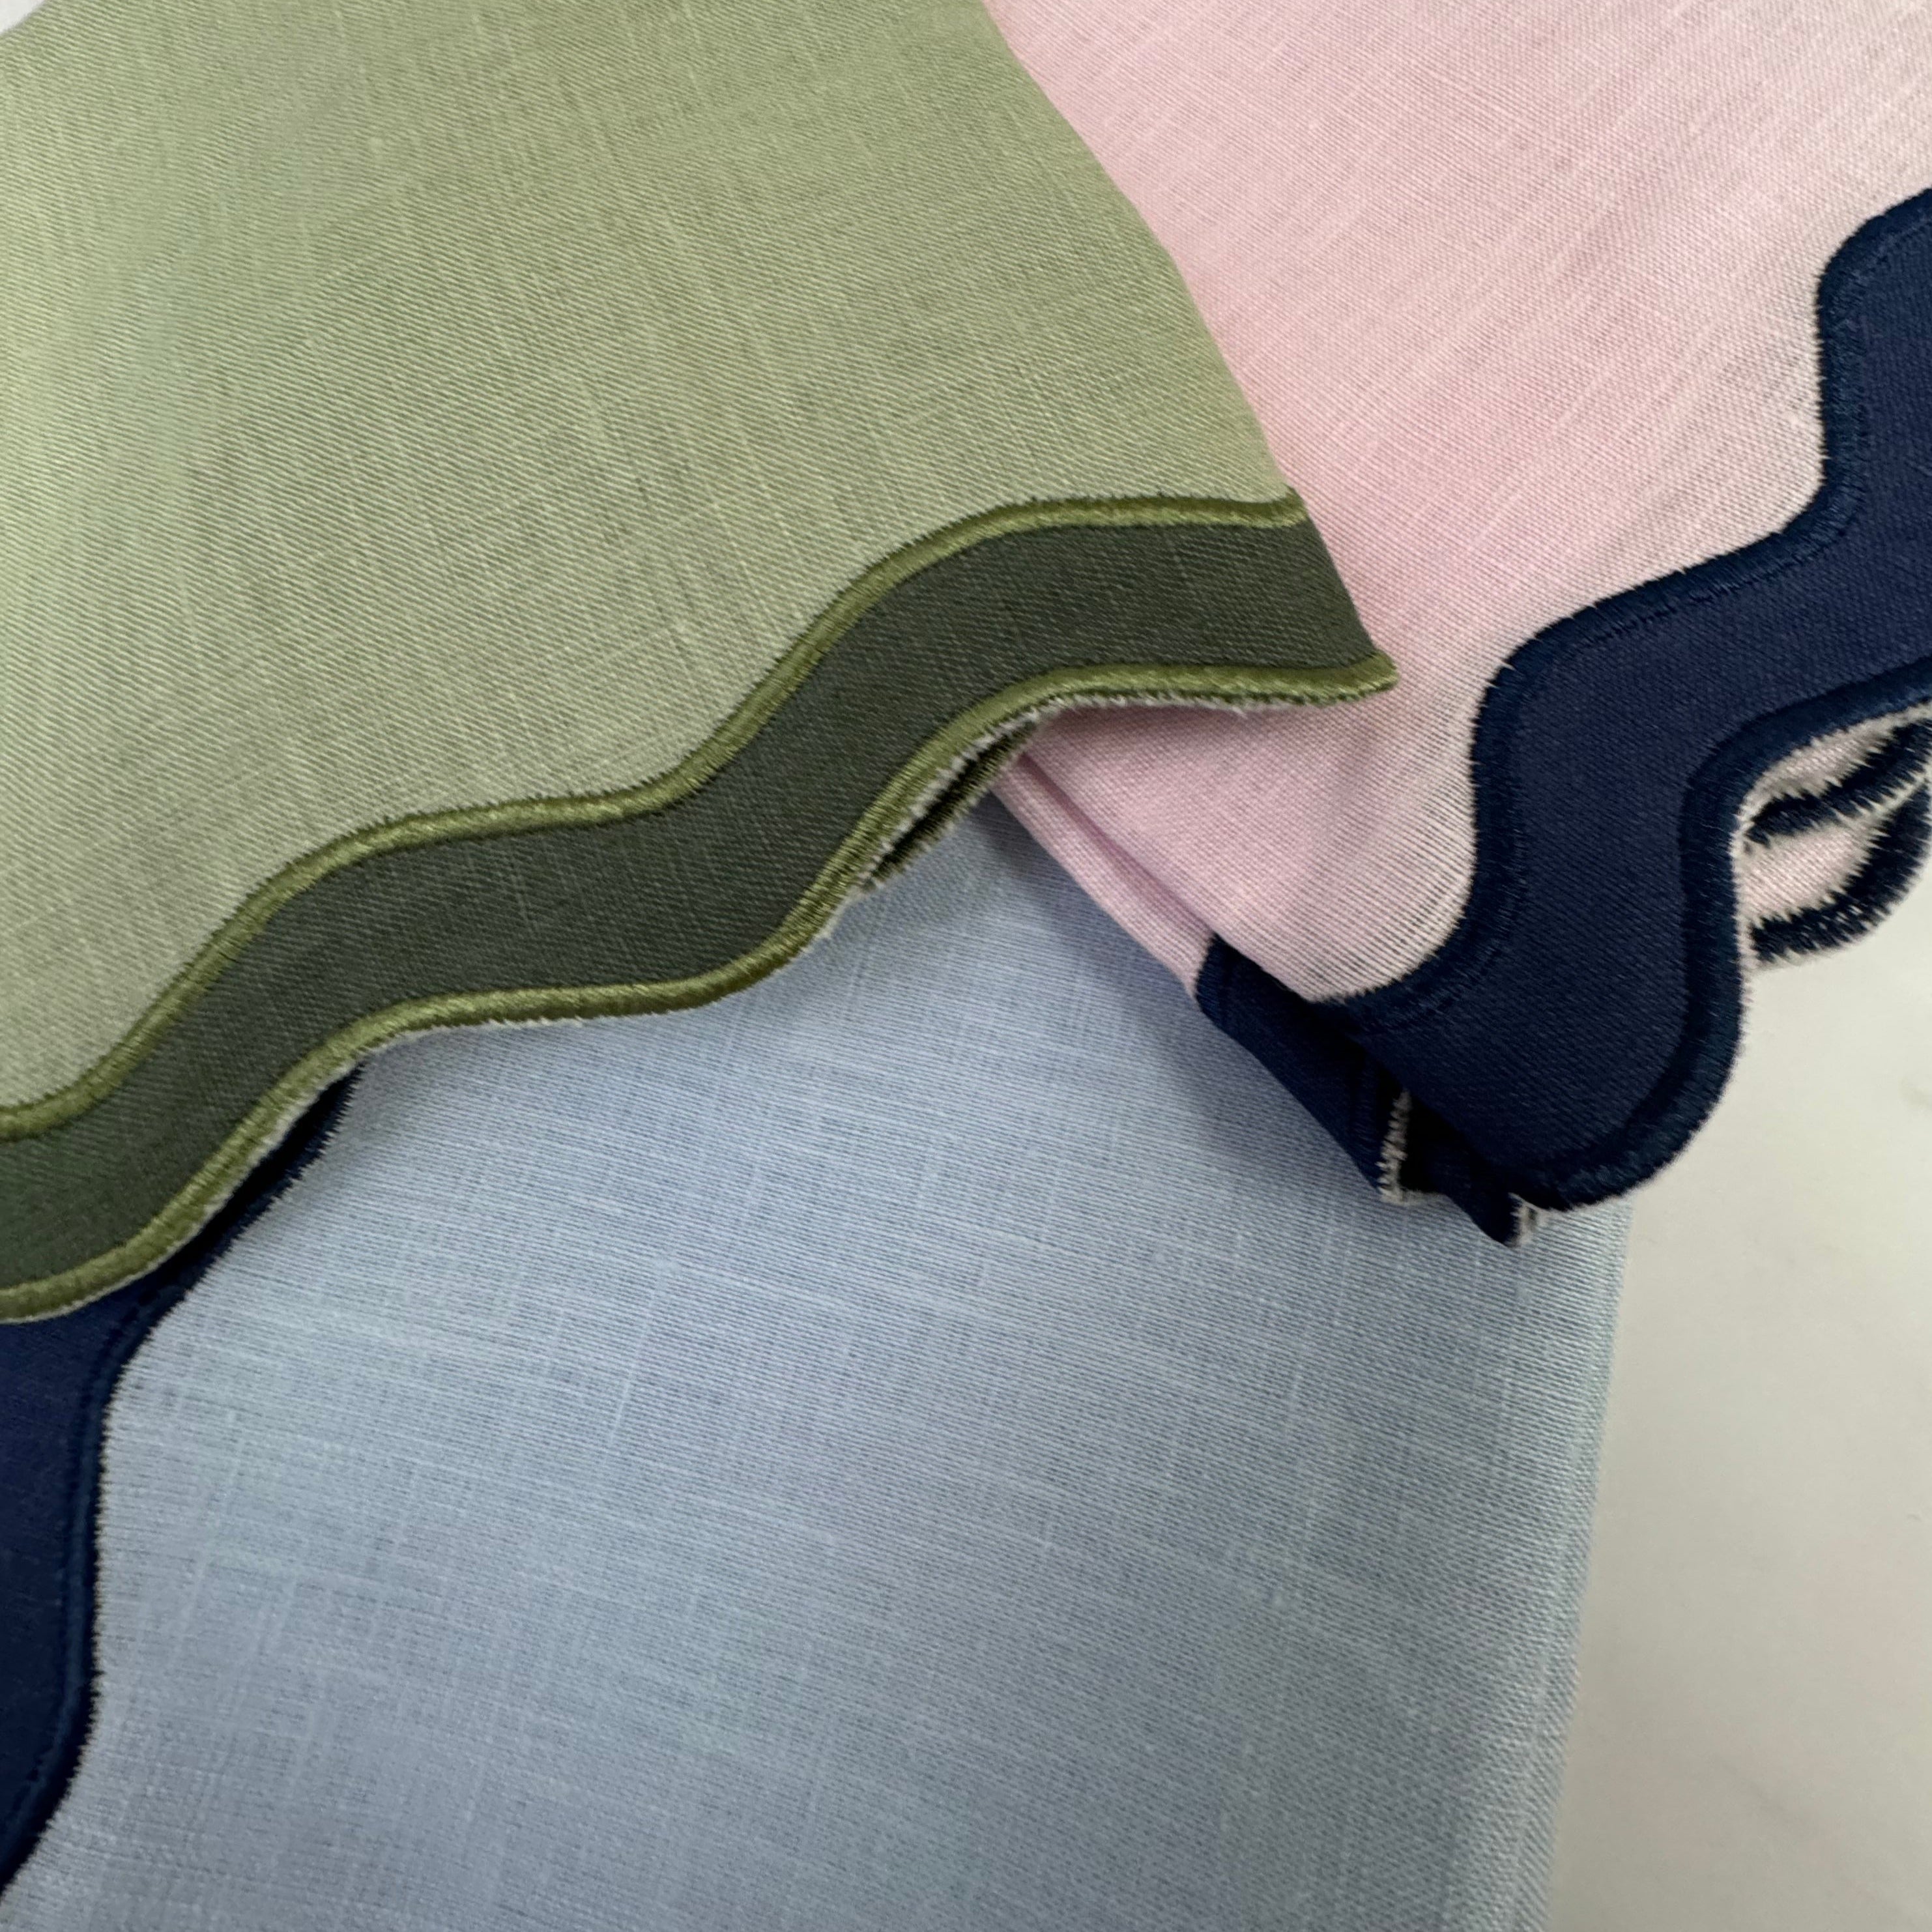 Sorrento Linen Napkins - Buy Cloth Napkins Online at FRANKY'S